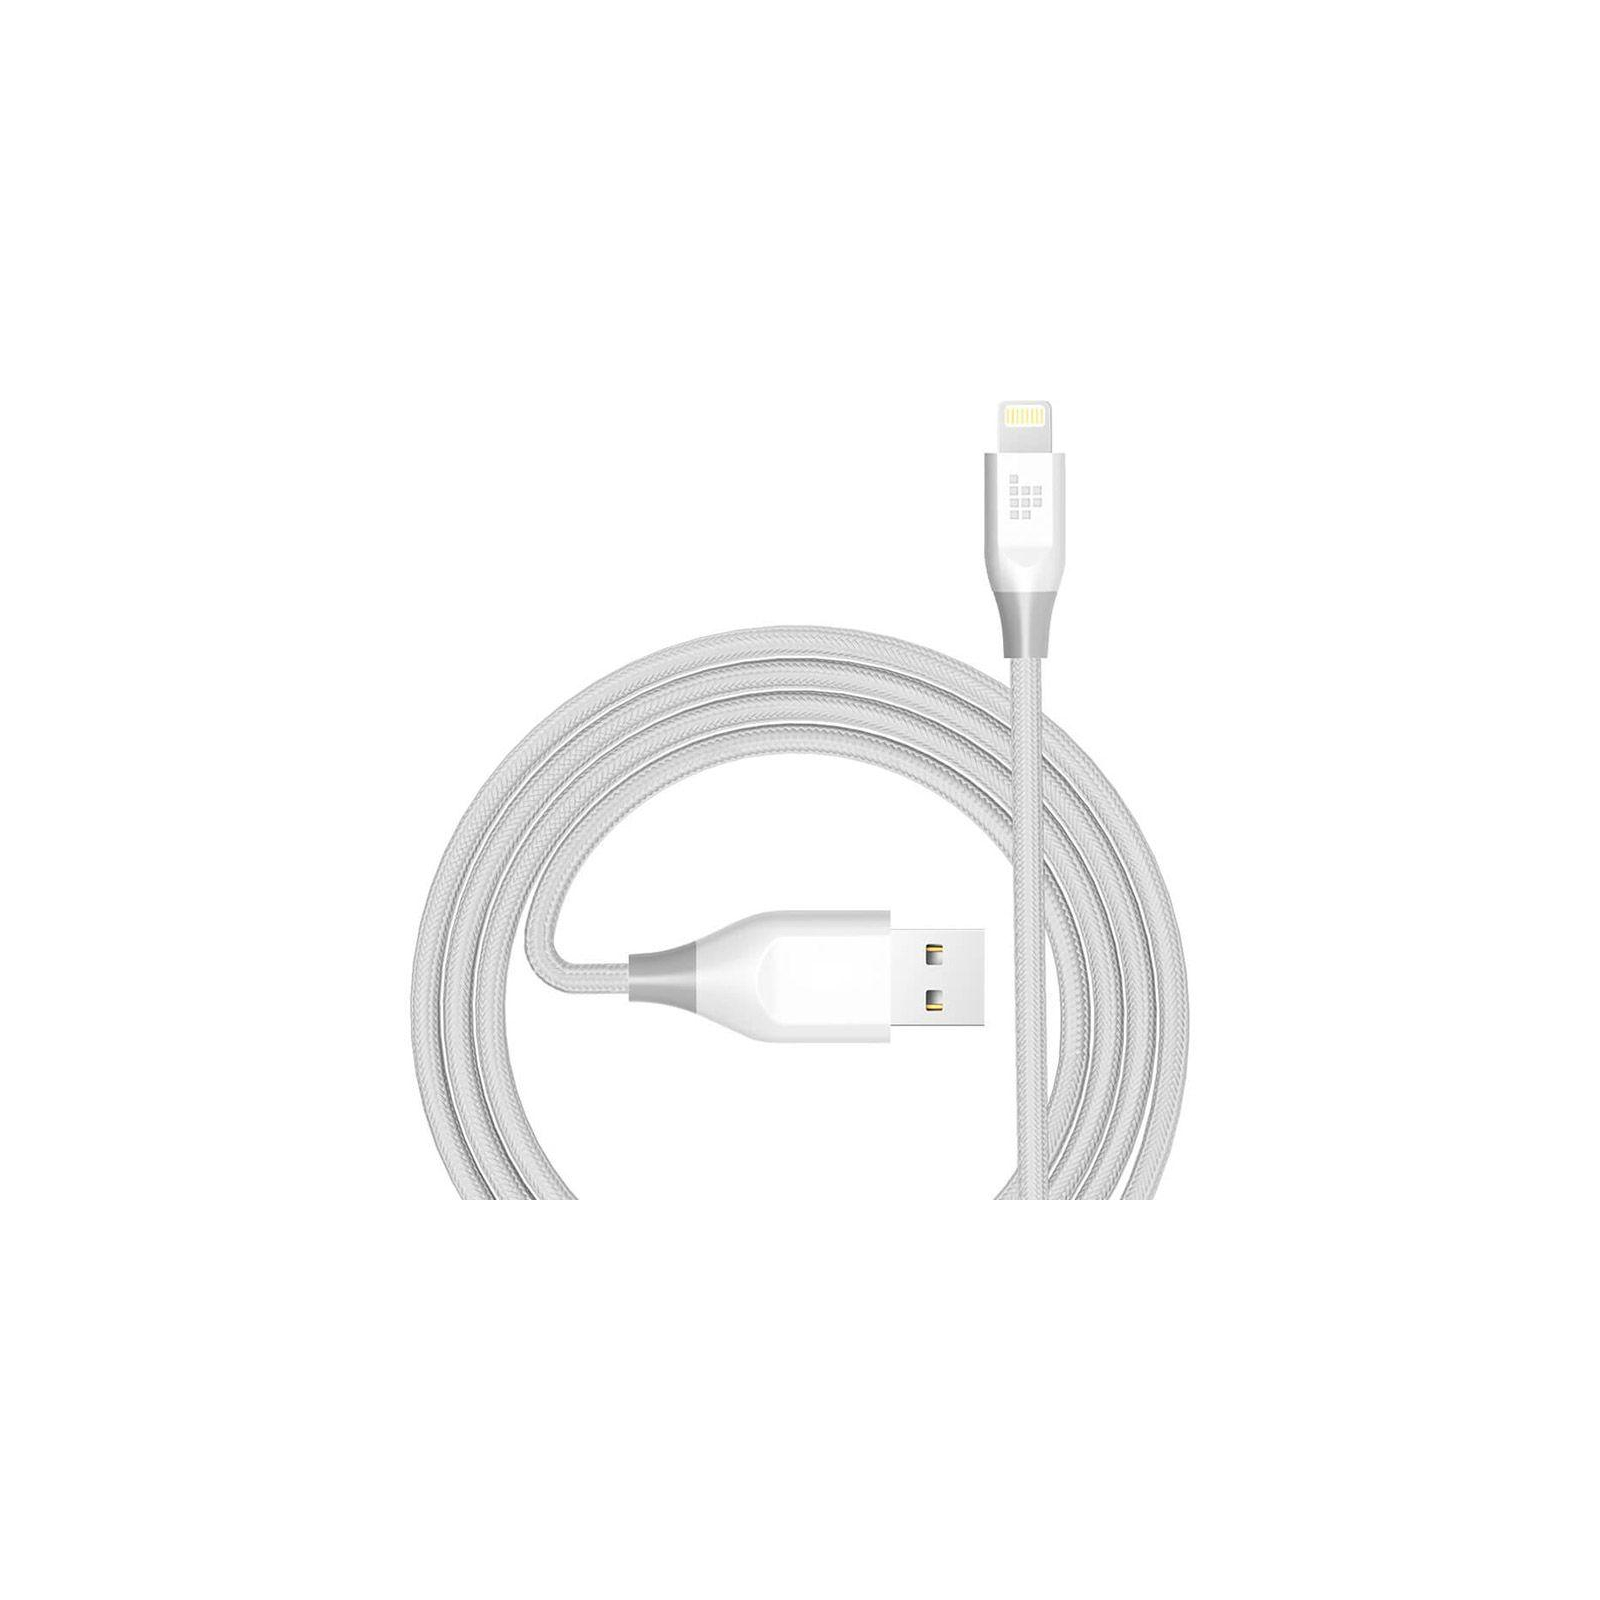 Дата кабель USB 2.0 AM to Lightning 1.2m MFi 19AWG Nylon White Tronsmart (210343)